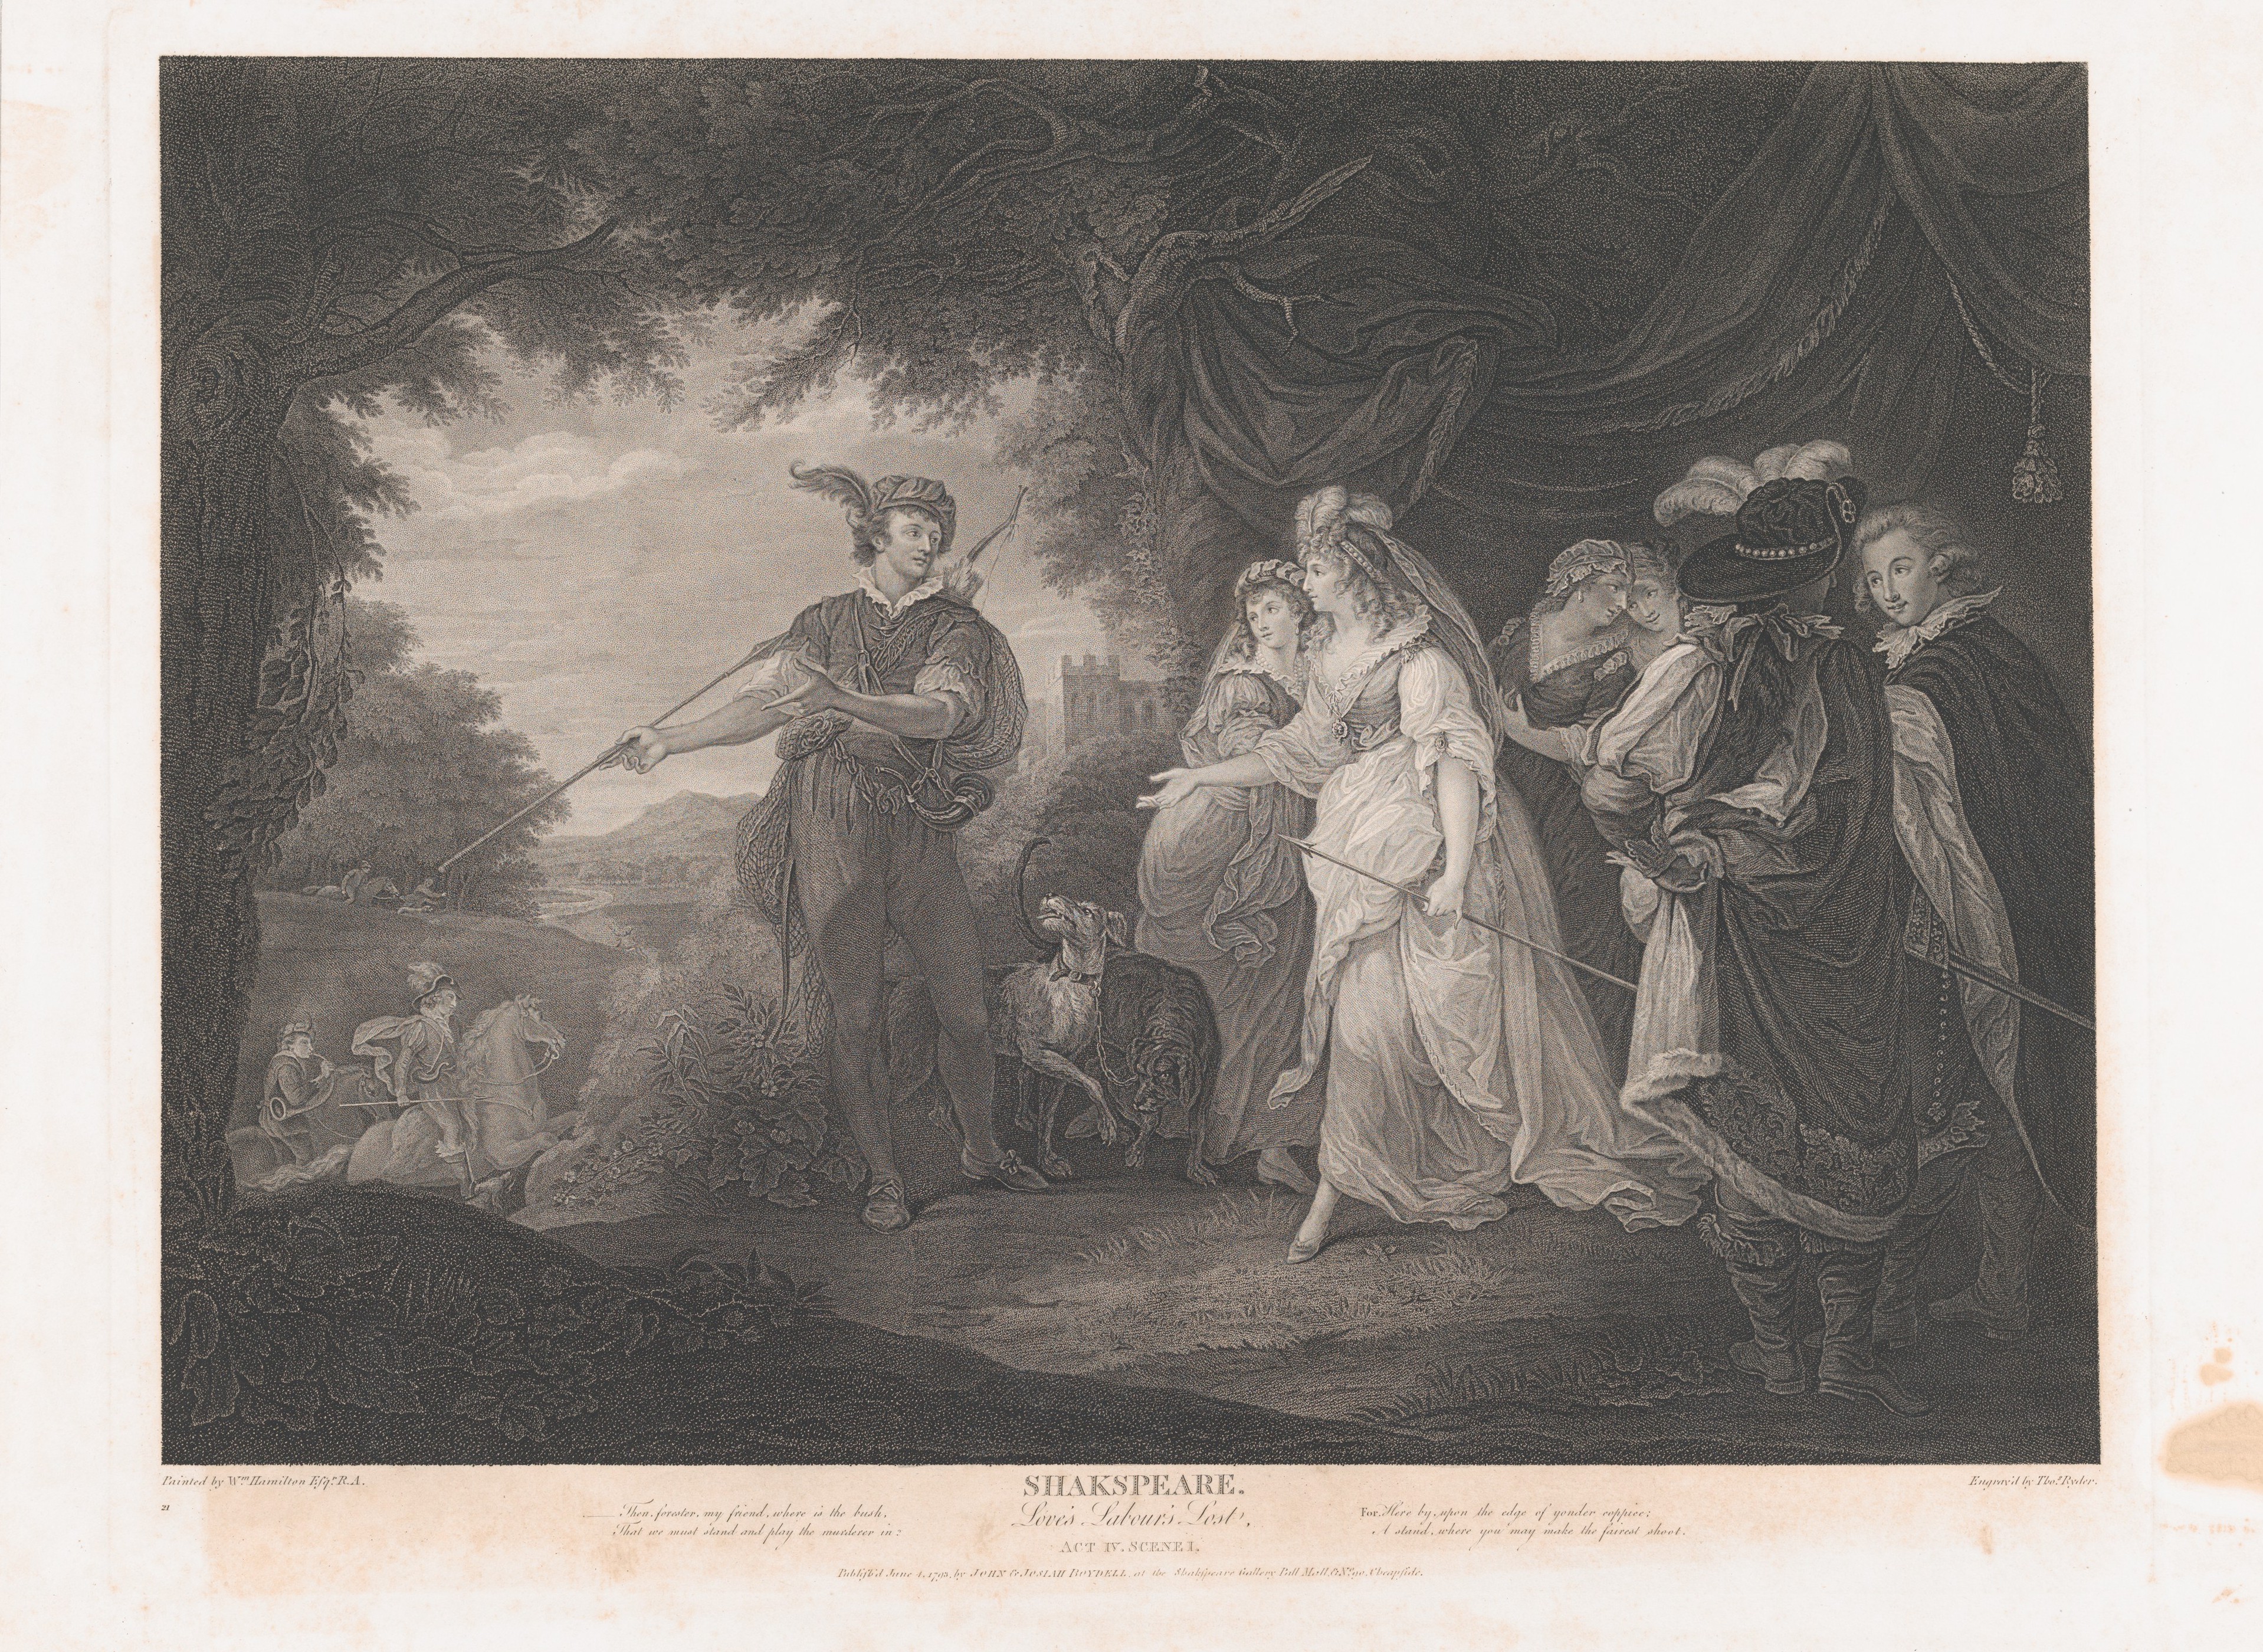 The Princess, Rosaline, etc. (Shakespeare, Love's Labour Lost, Act 4, Scene 1)}}'', gravure pour la [[Boydell Shakespeare Gallery